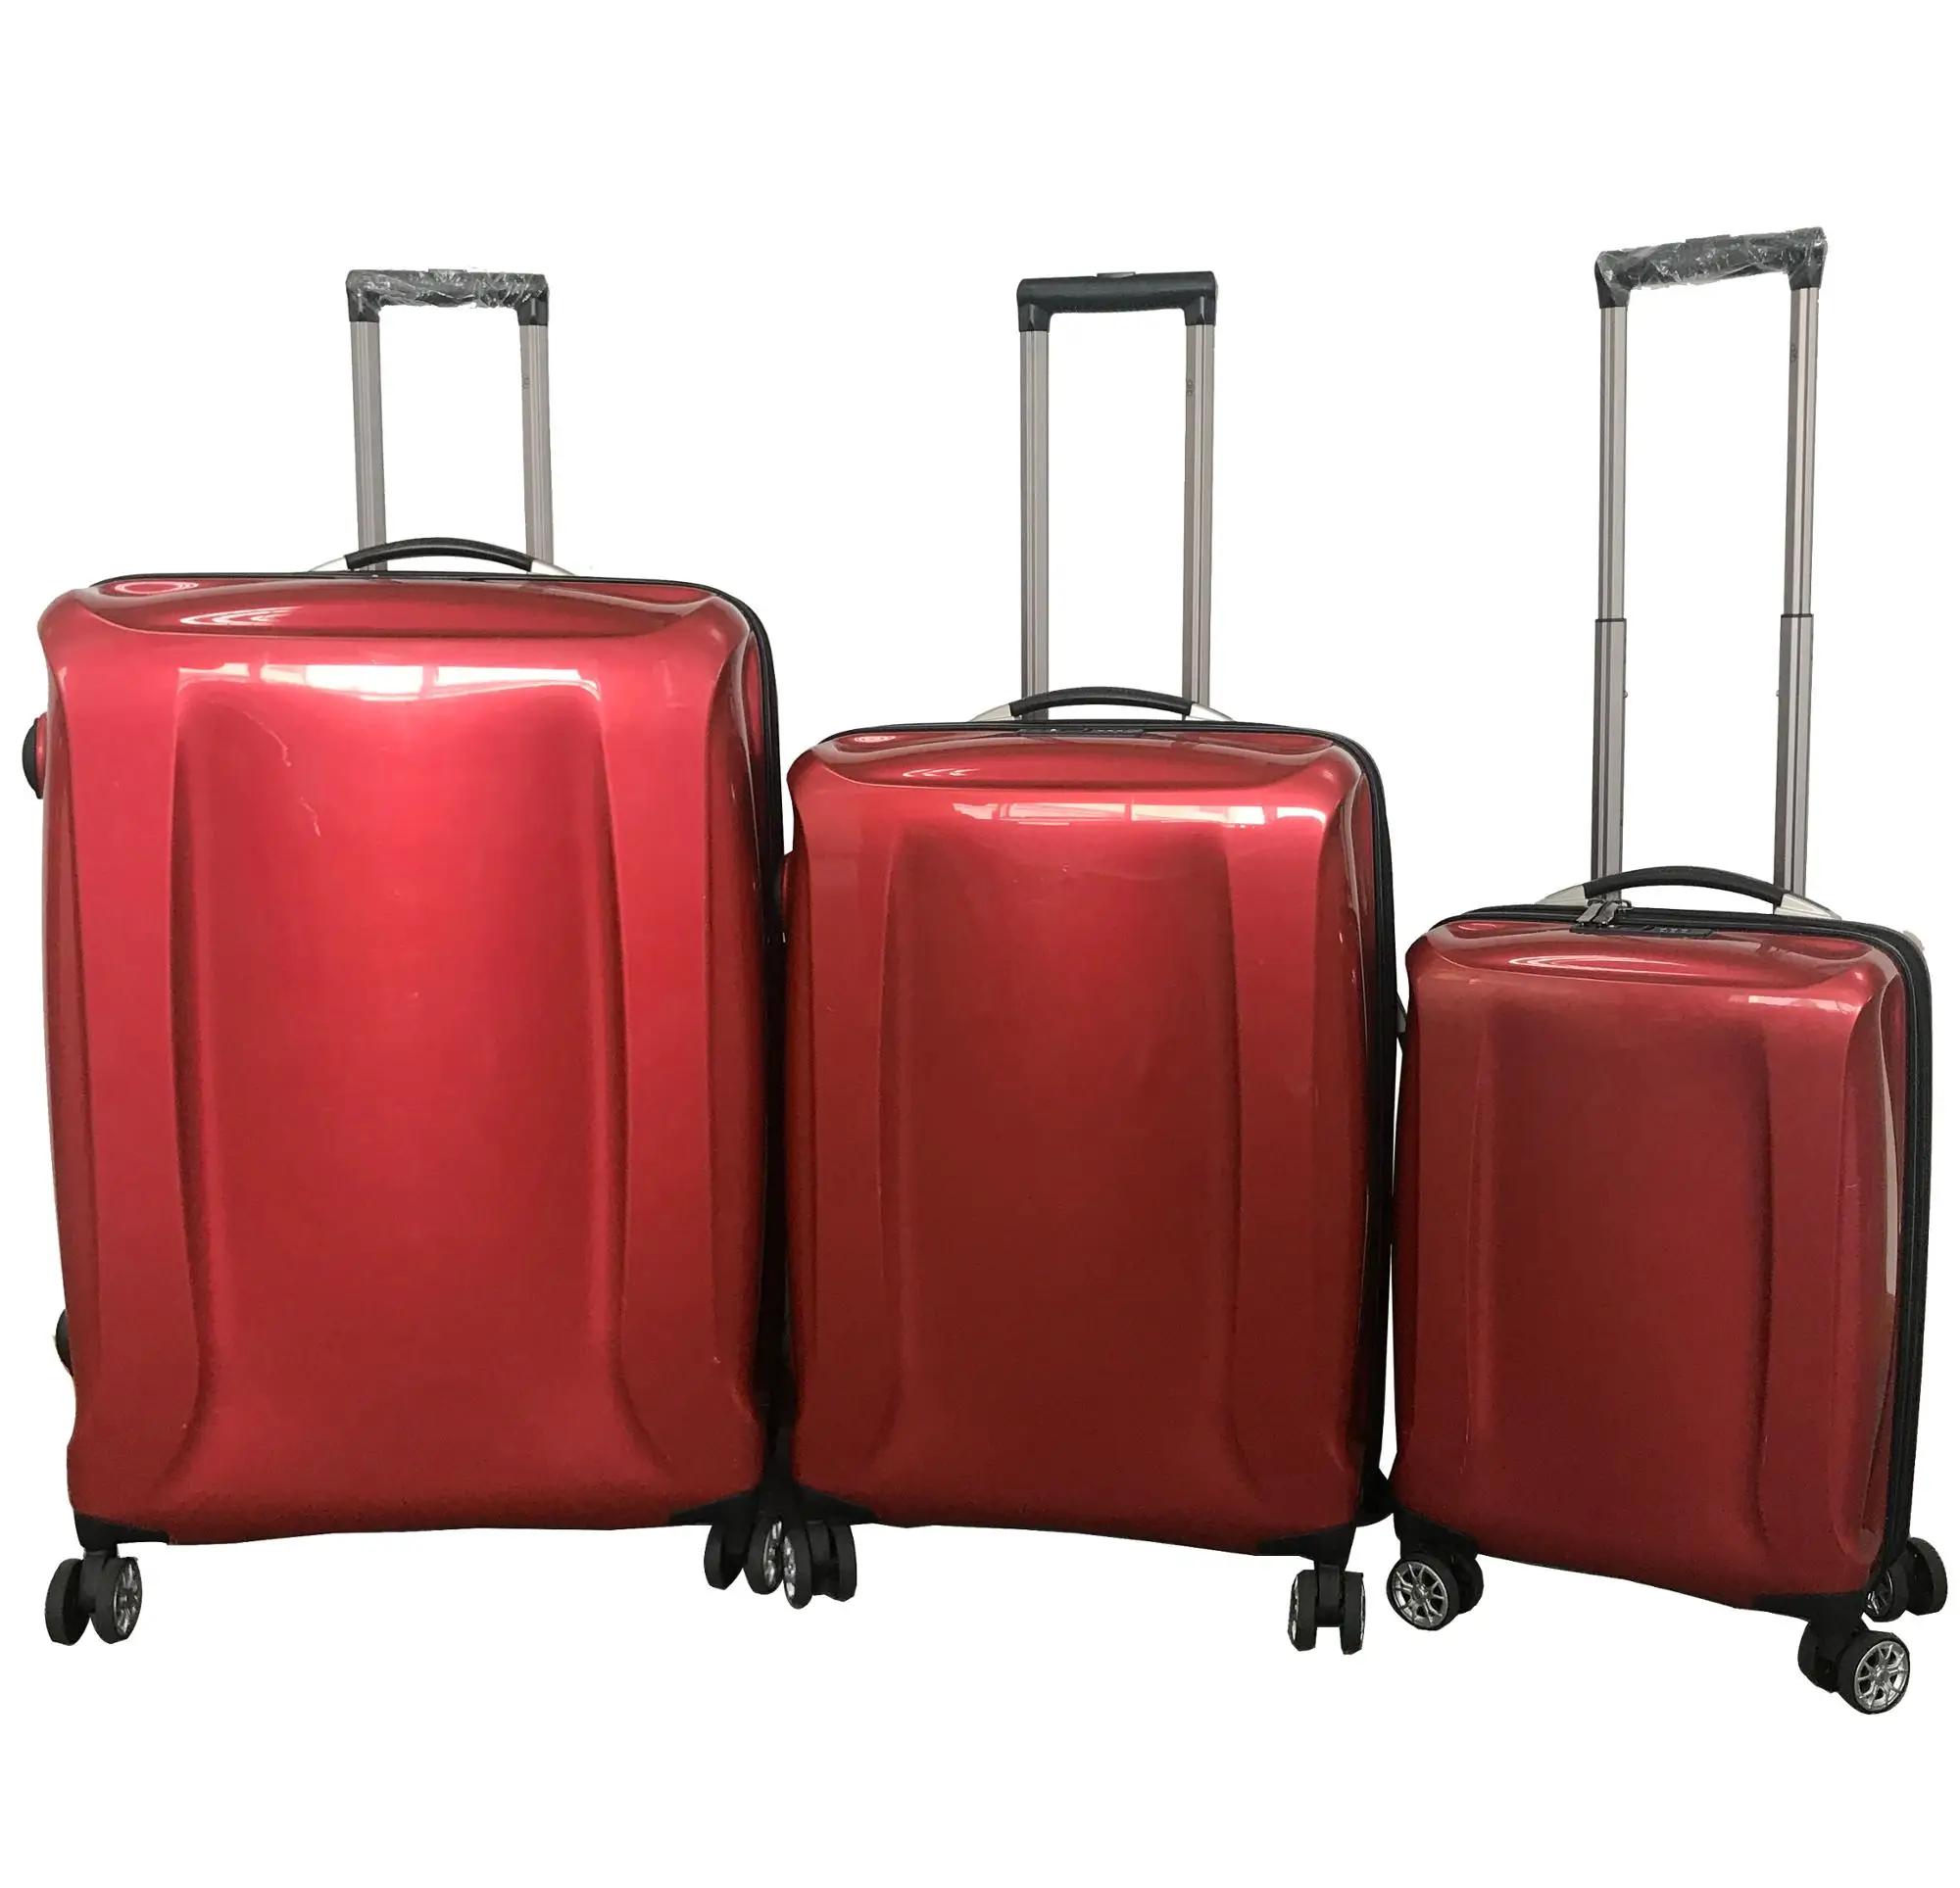 Japanese Borderline Luggage Travel World Trolley Bags Buy Travel